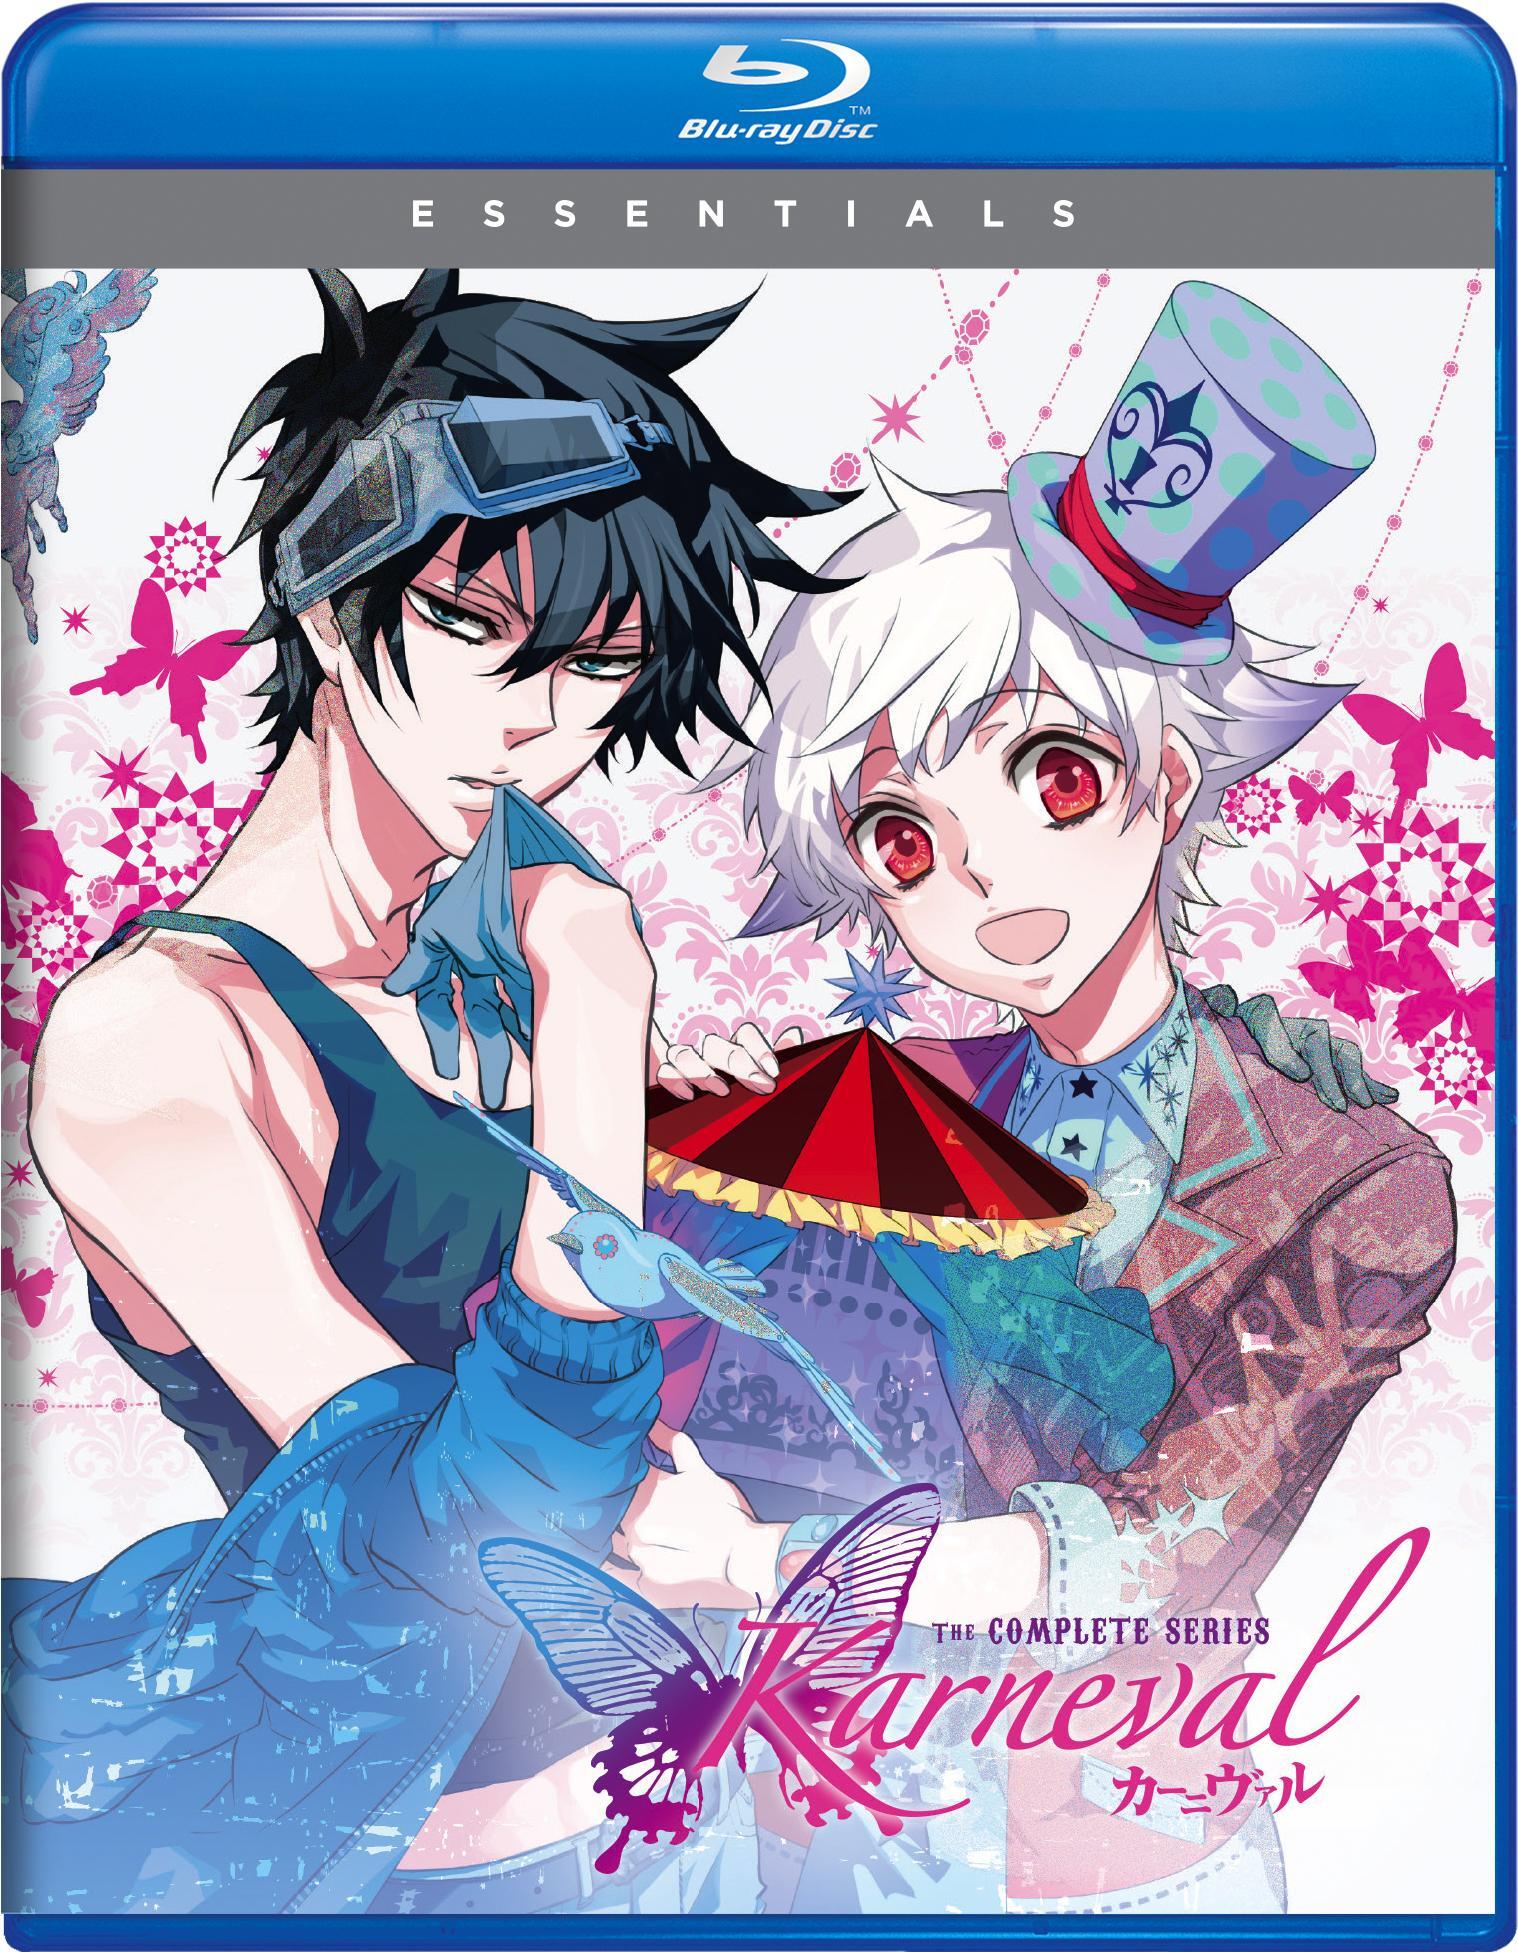 Karneval: The Complete Collection (Blu-ray + Digital Copy) - Blu-ray [ 2013 ]